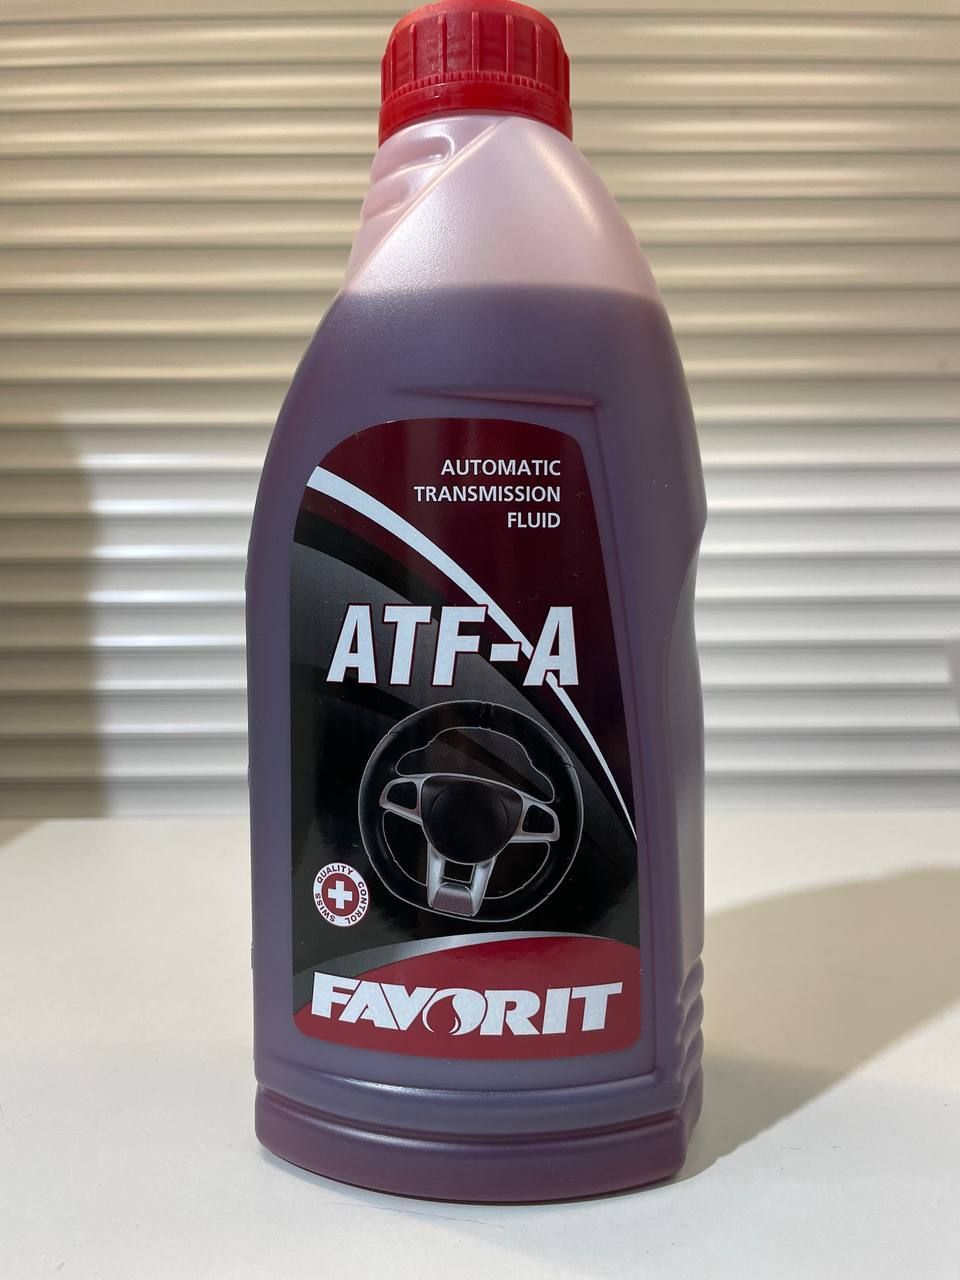 Atf d ii. Масло трансмиссионное ATF. Favorit ATF-A, 4л. Дешевое трансмиссионное масло. Масло Favorit ATF D III 1л.